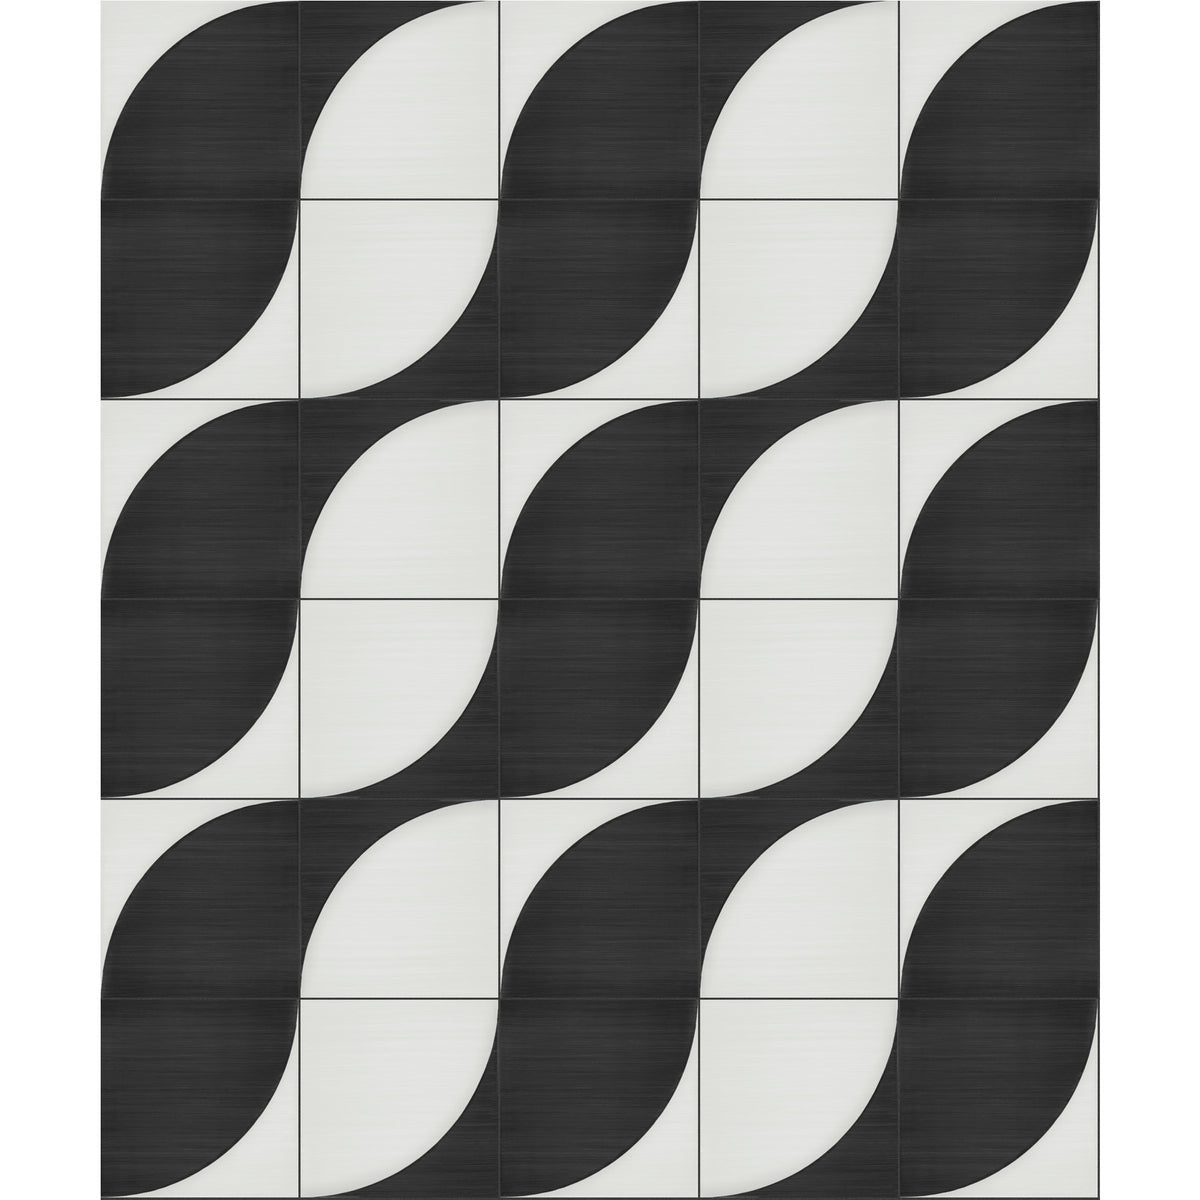 Marazzi - Scenario 8 in. x 8 in. Glazed Porcelain Tile - SR28 Nero Crescent Wave Pattern